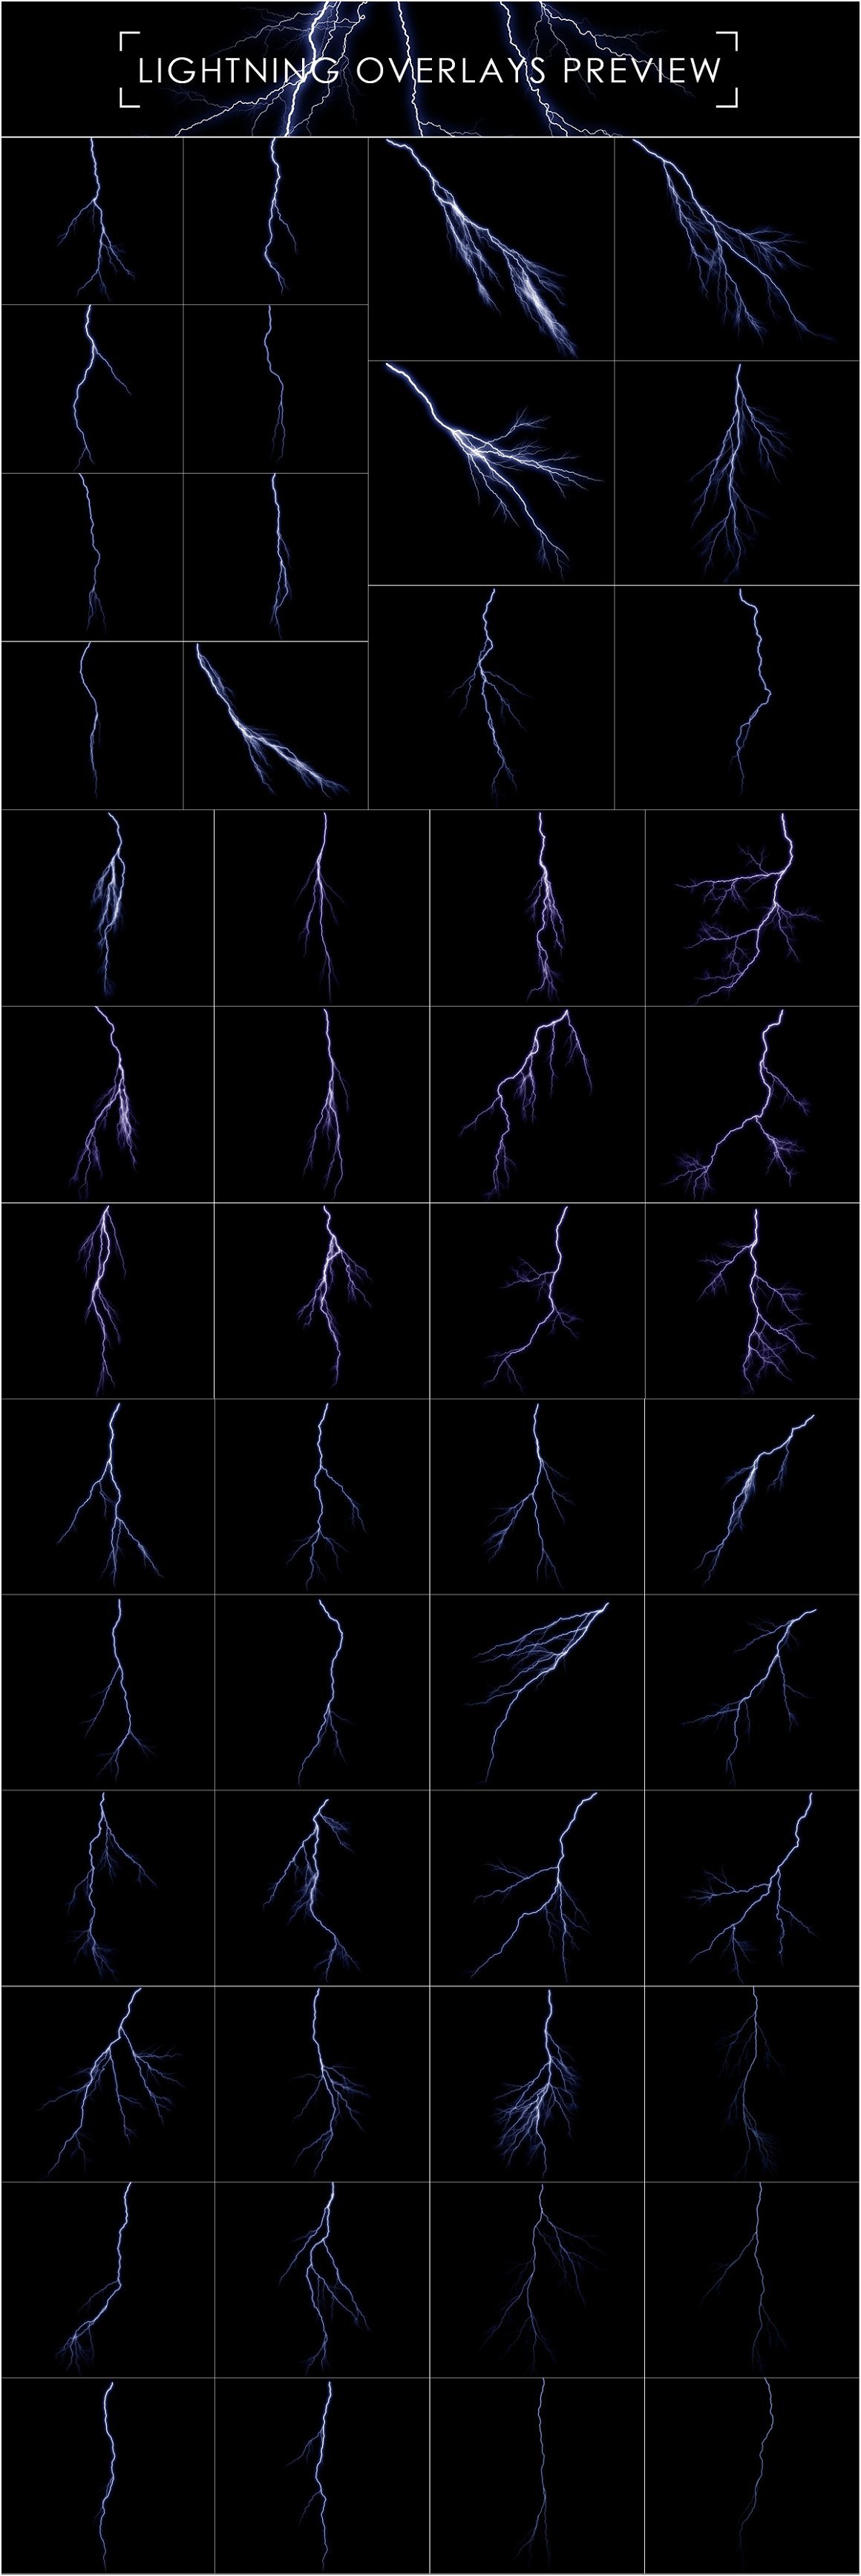 lightning overlays prev 2 686